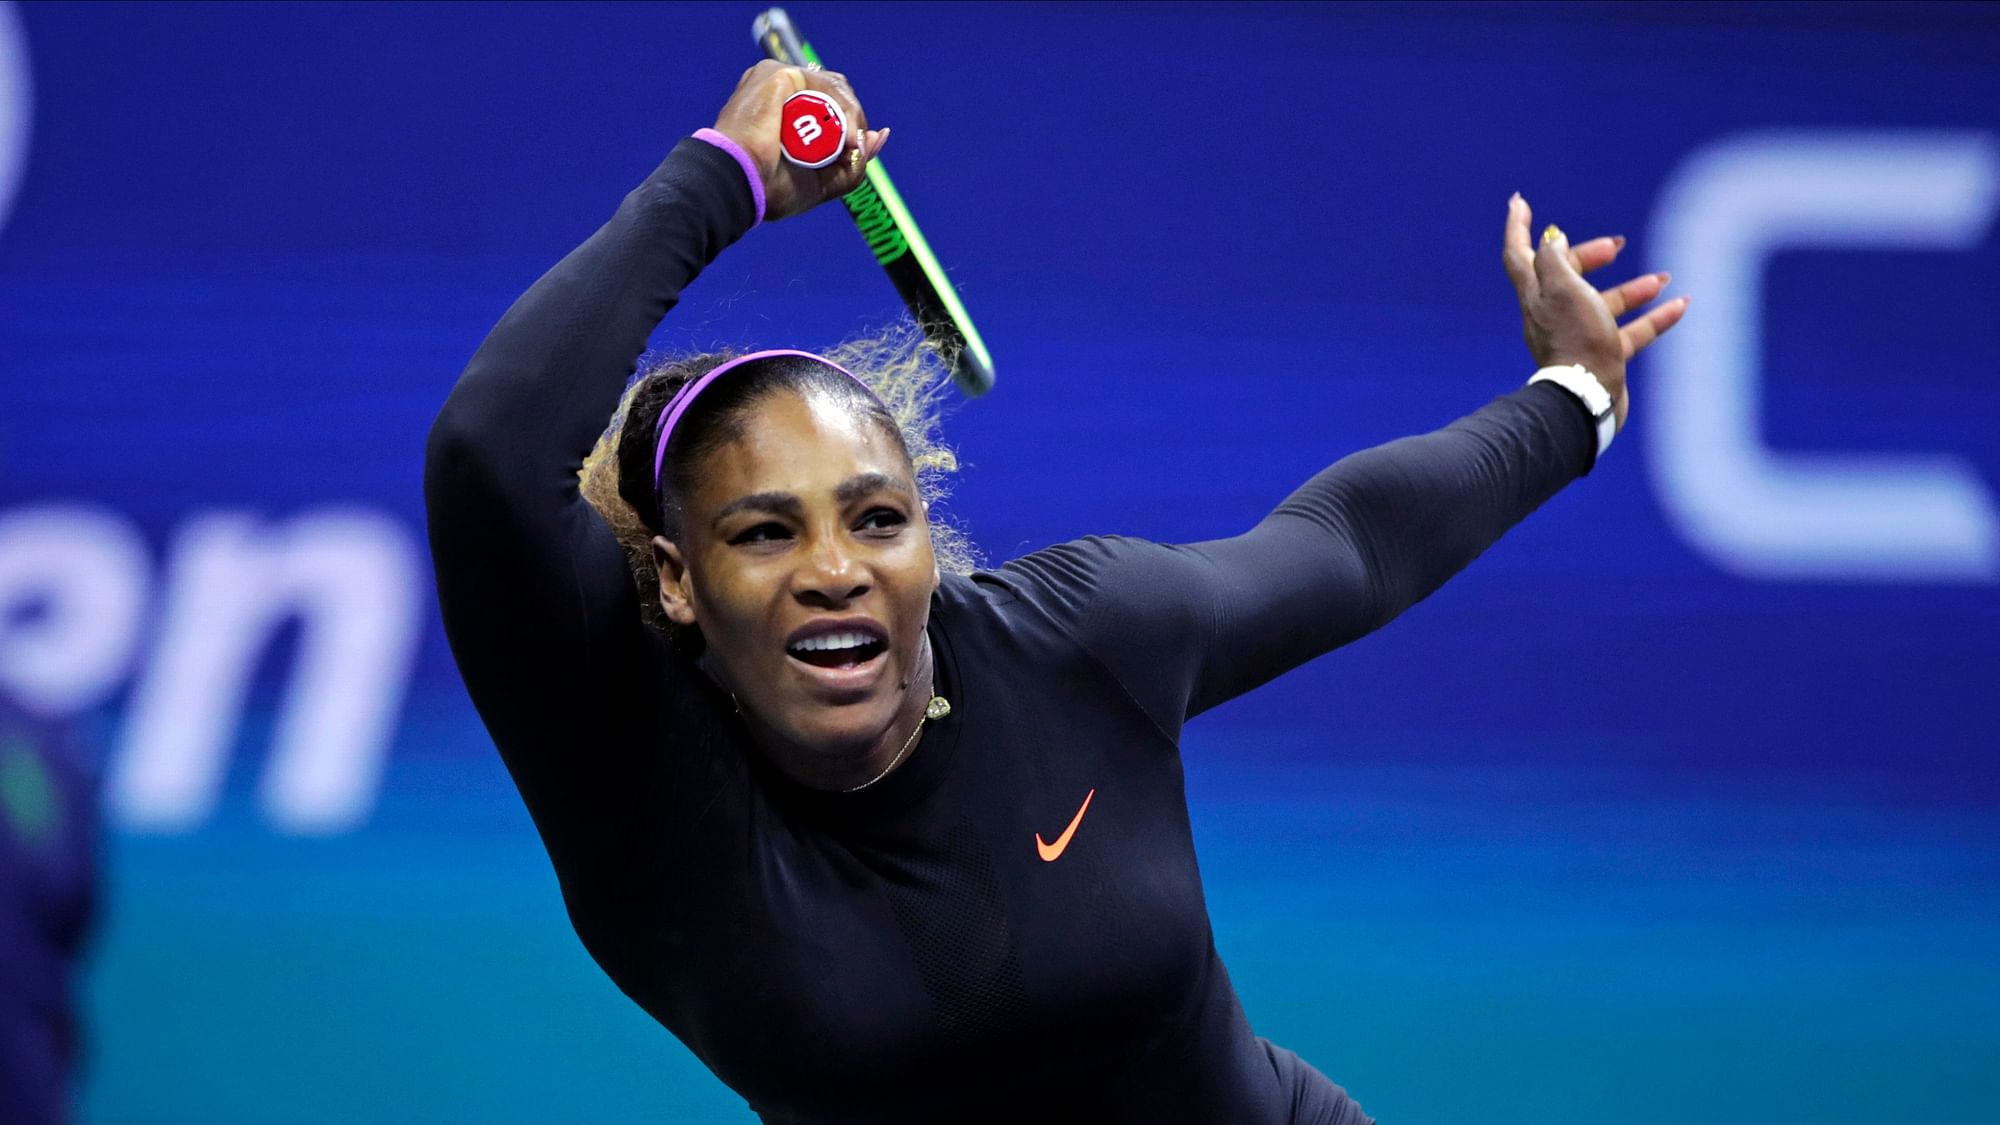 Serena Williams played nearly perfect tennis and beat Maria Sharapova 6-1, 6-1.